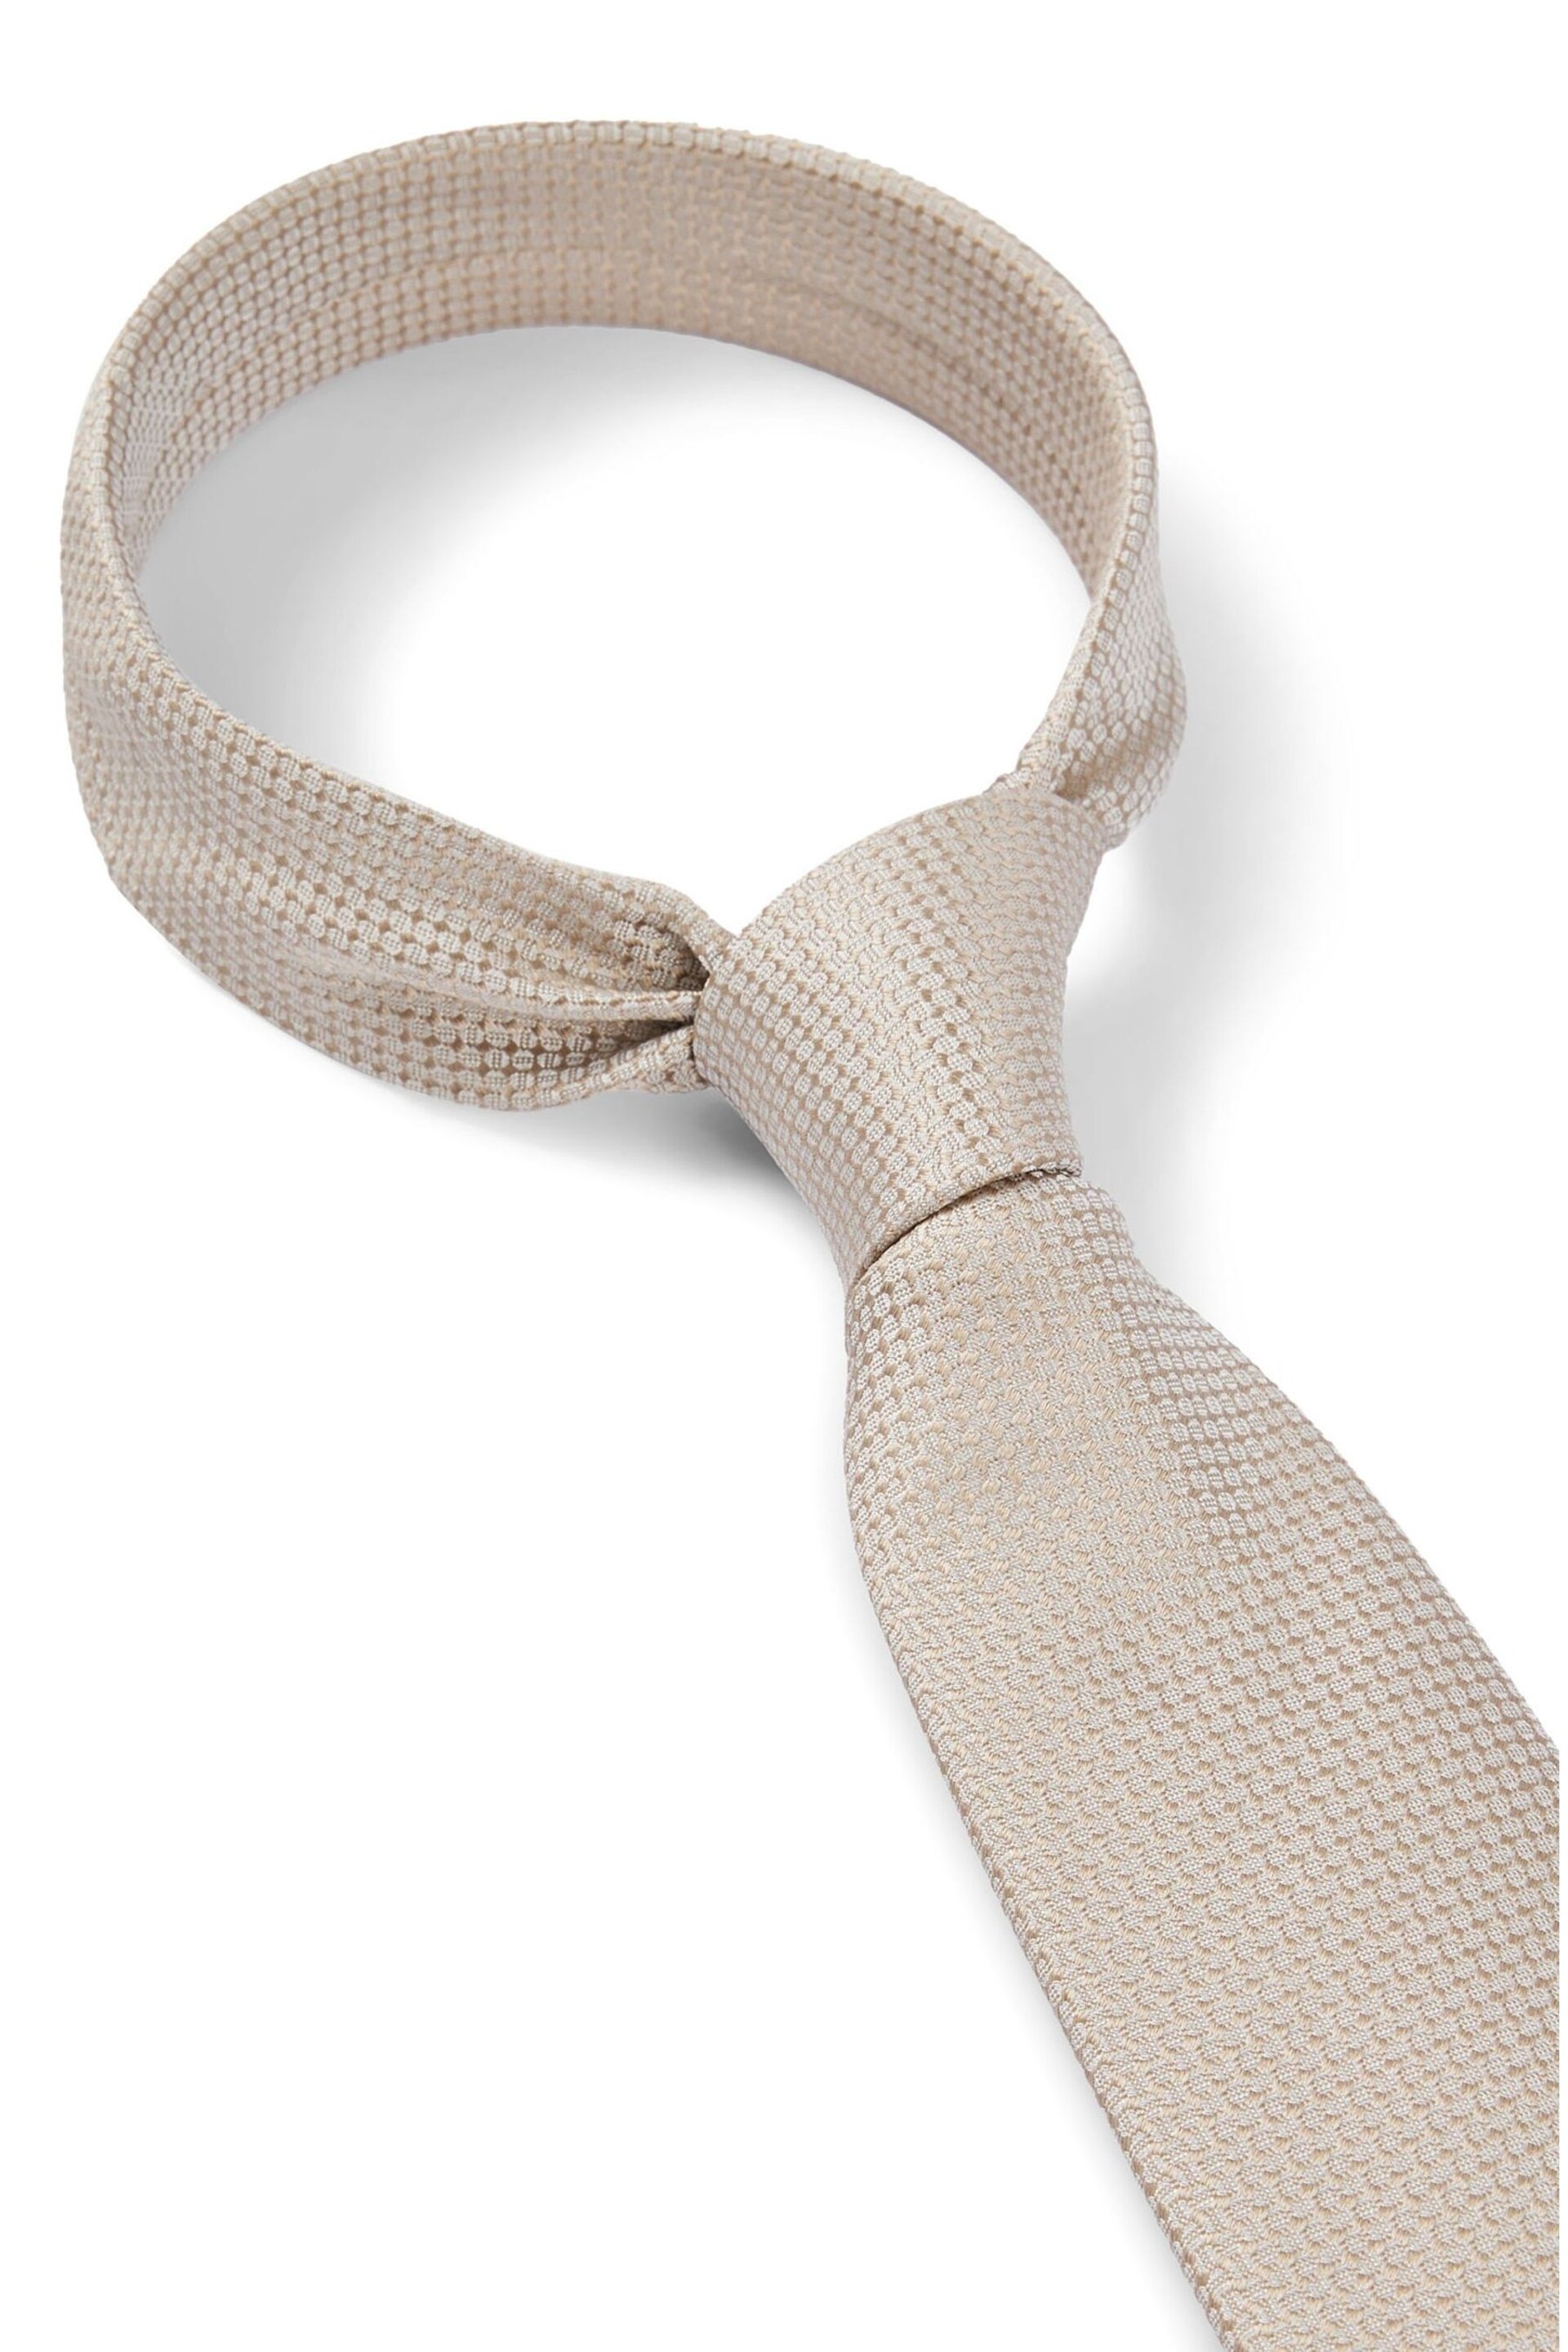 BOSS Natural Jacquard Pattern Silk Blend Tie - Image 3 of 5